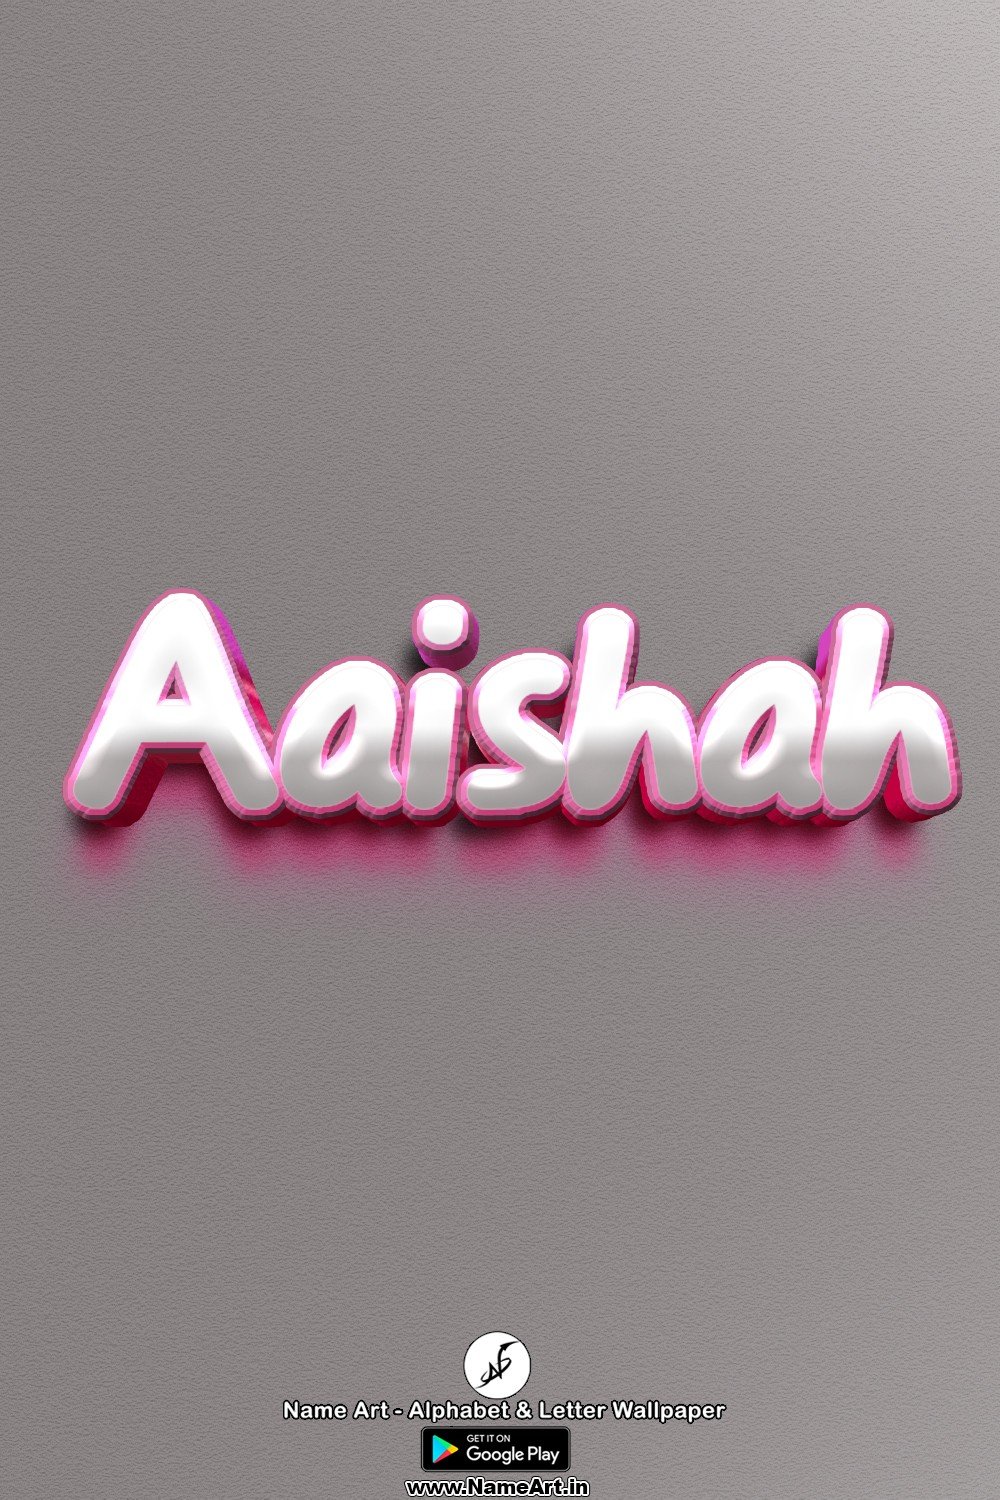 Aaishah | Whatsapp Status Aaishah || Happy Birthday To You !! | Aaishah New Whatsapp Status images |